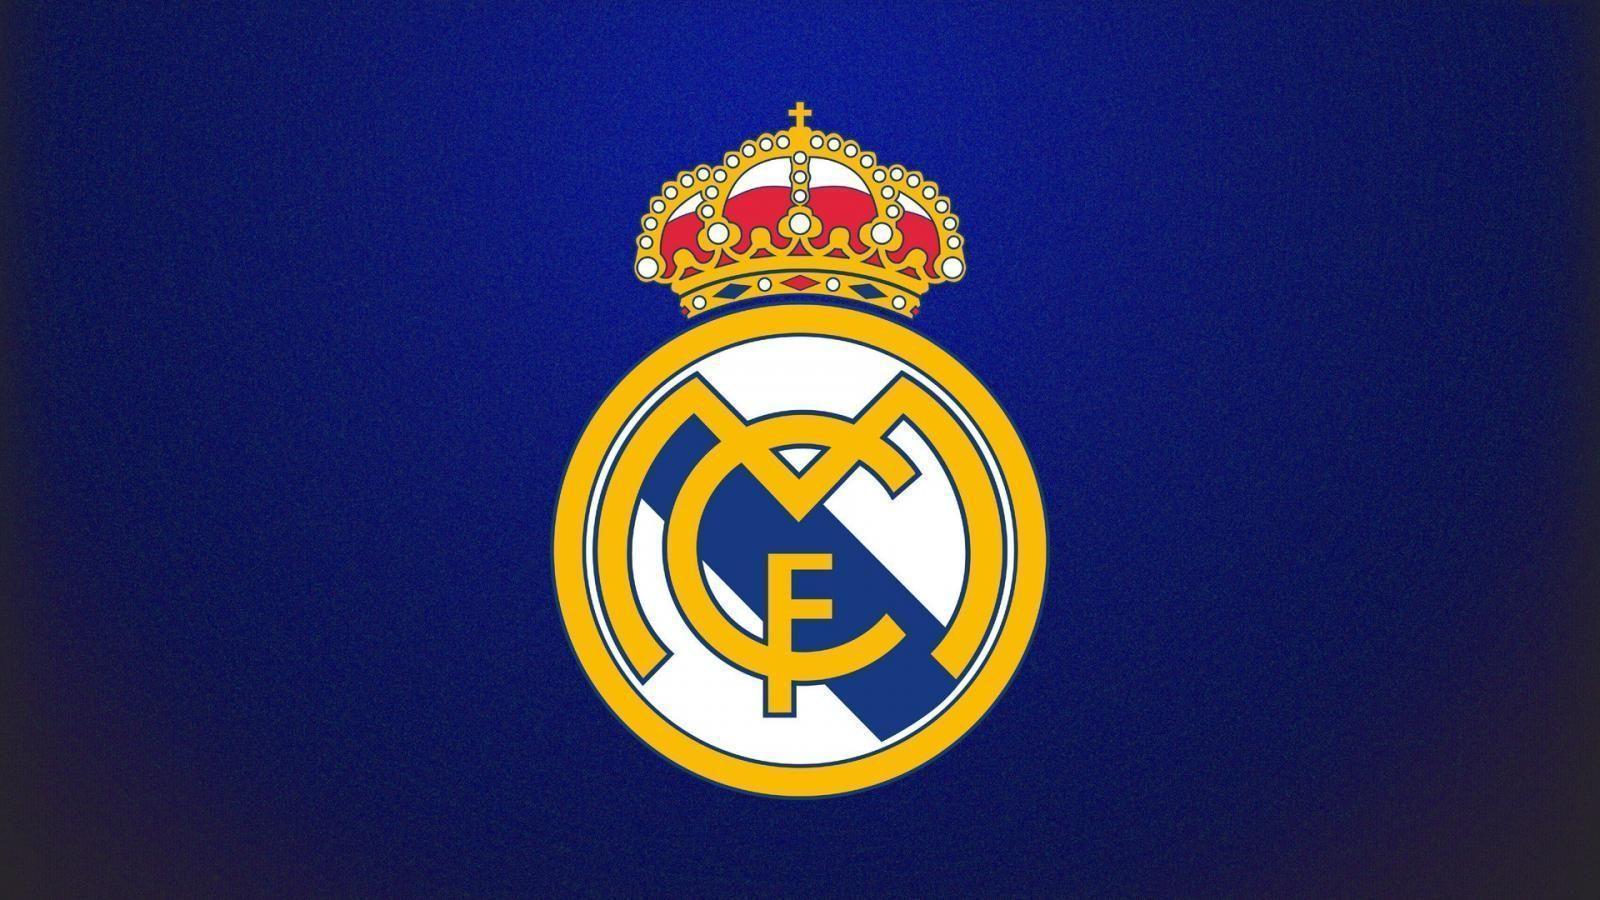 Real Madrid Logo Wallpapers 2015